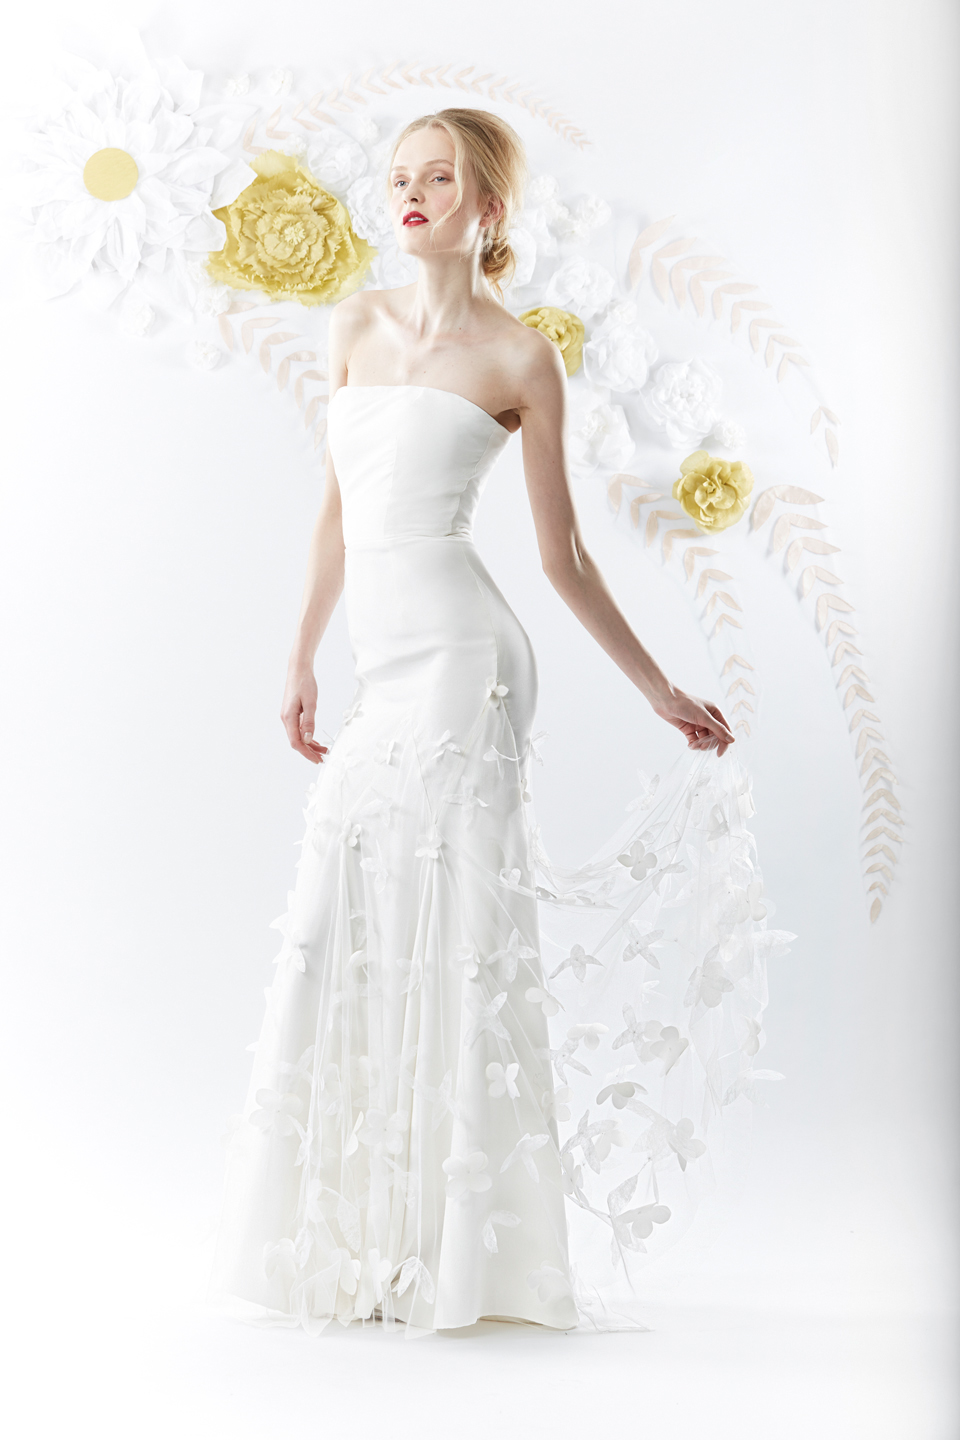 Olwen bourke, nature inspired wedding dresses